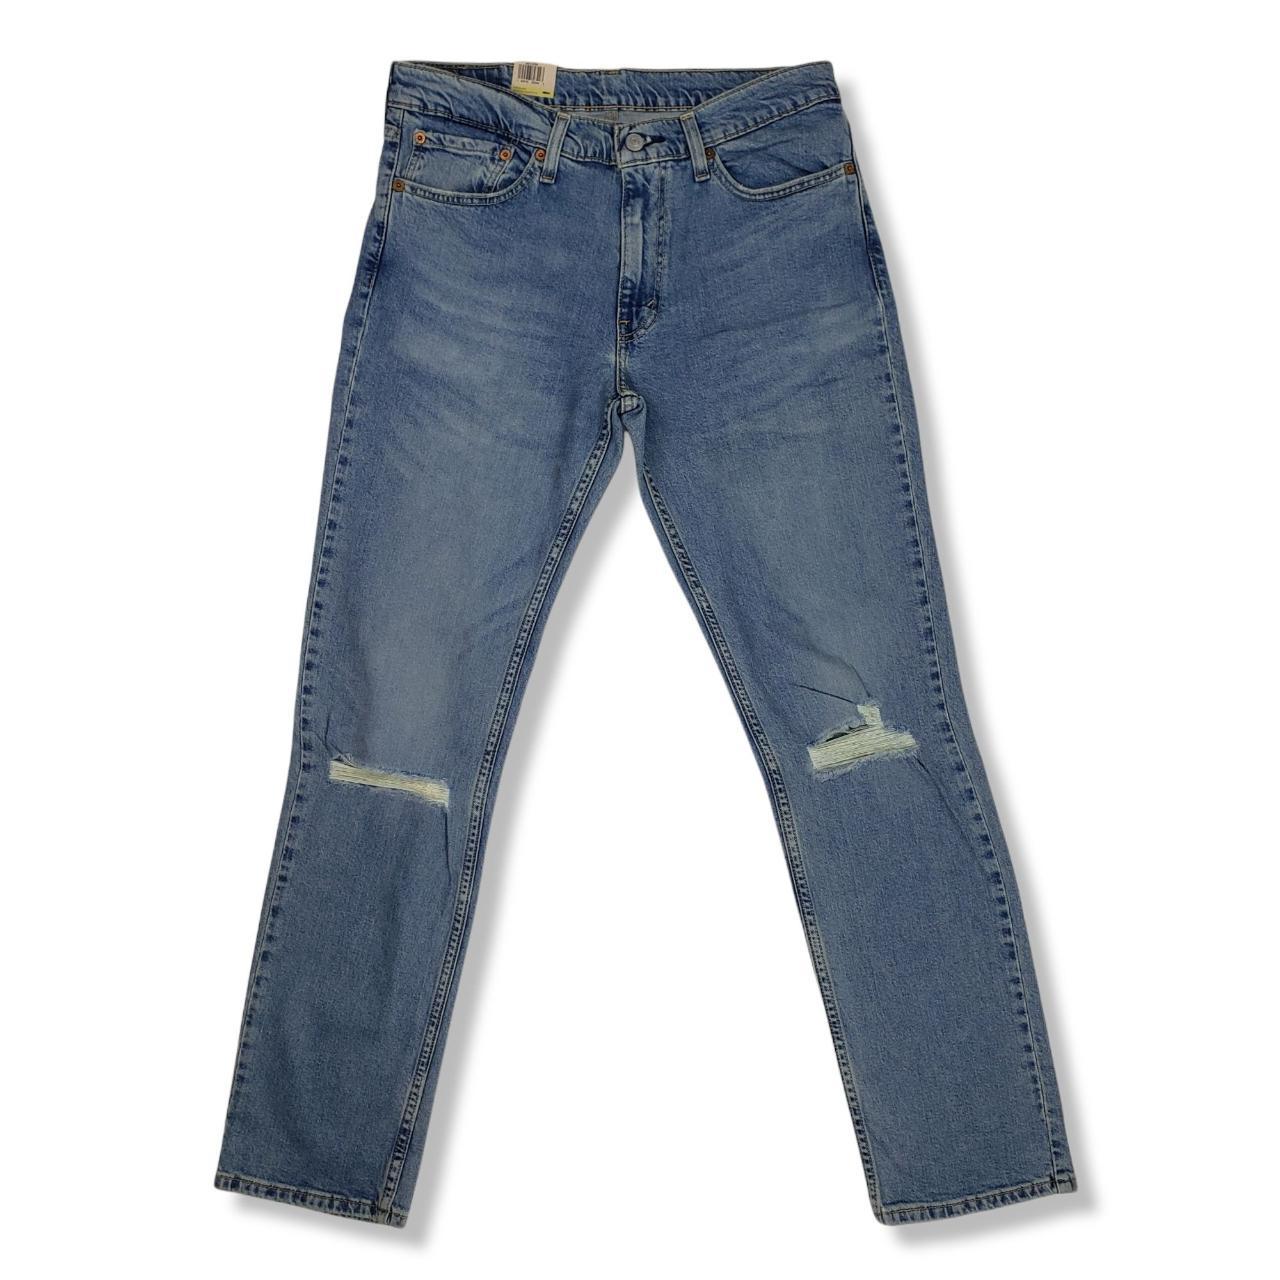 Levi's 511 Flex Slim Men's Jeans New with... - Depop